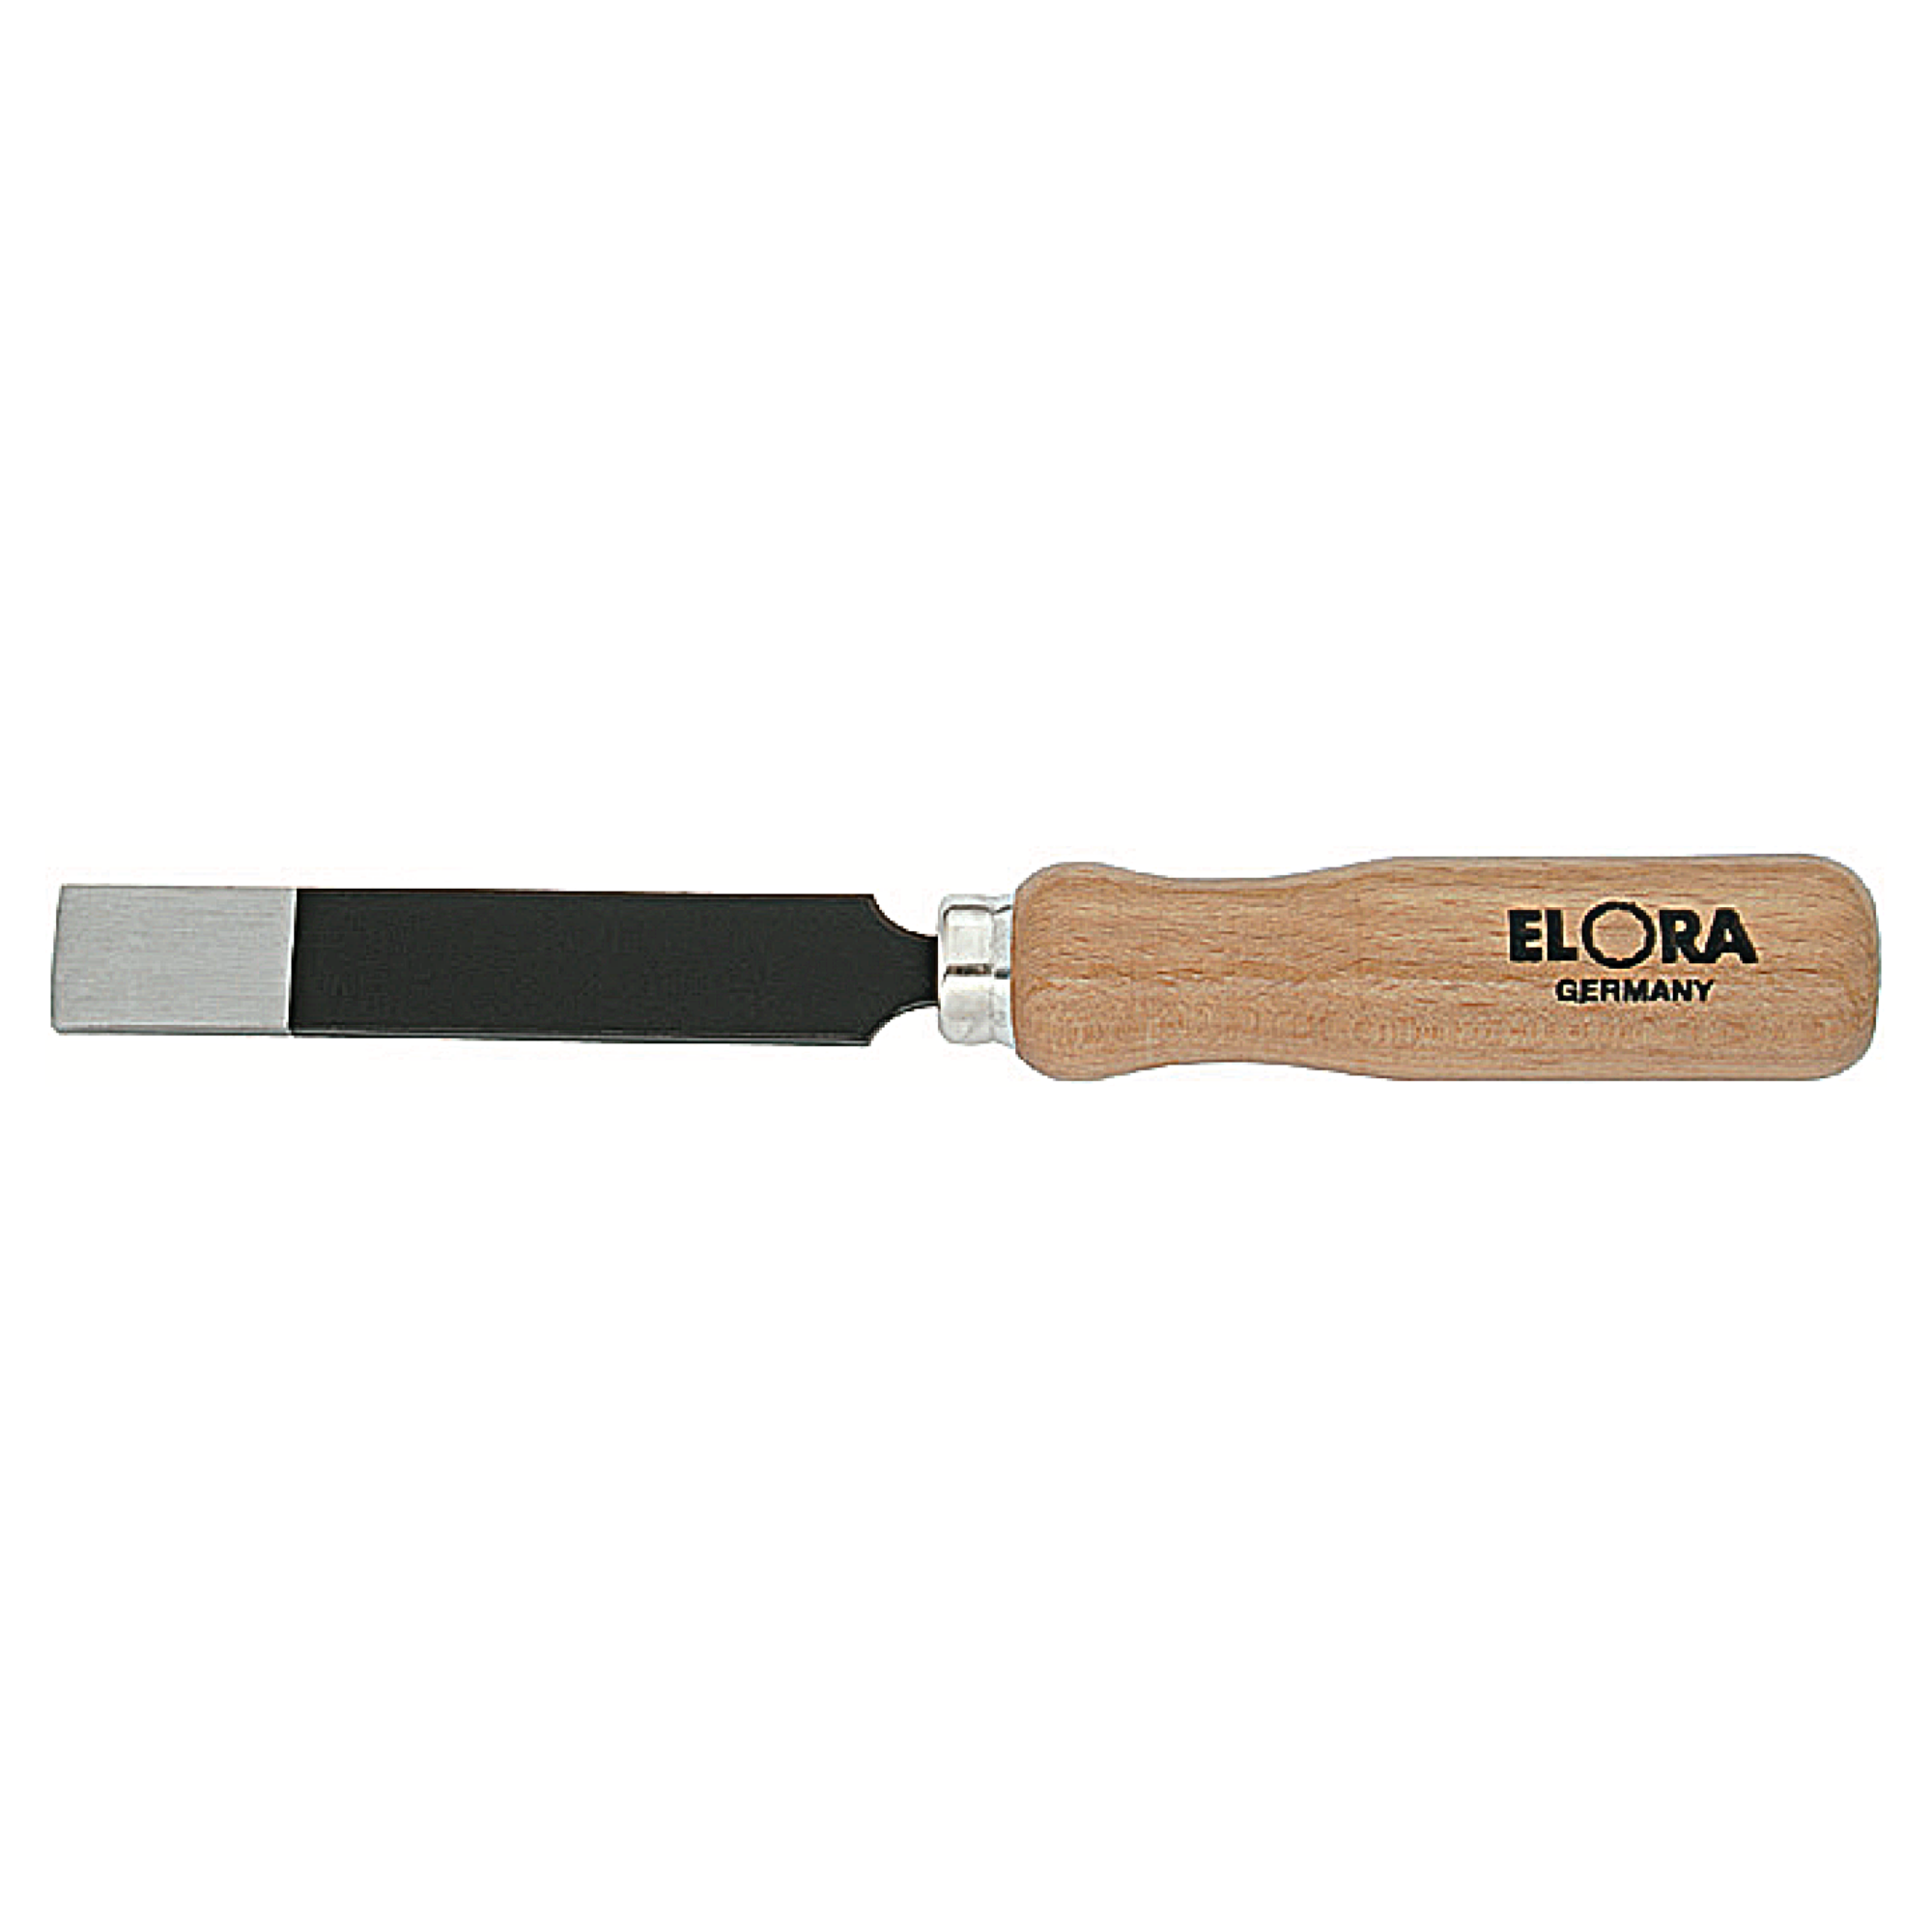 ELORA 276 Hollow Scraper with Wooden Handle (ELORA Tools) - Premium Scraper from ELORA - Shop now at Yew Aik.